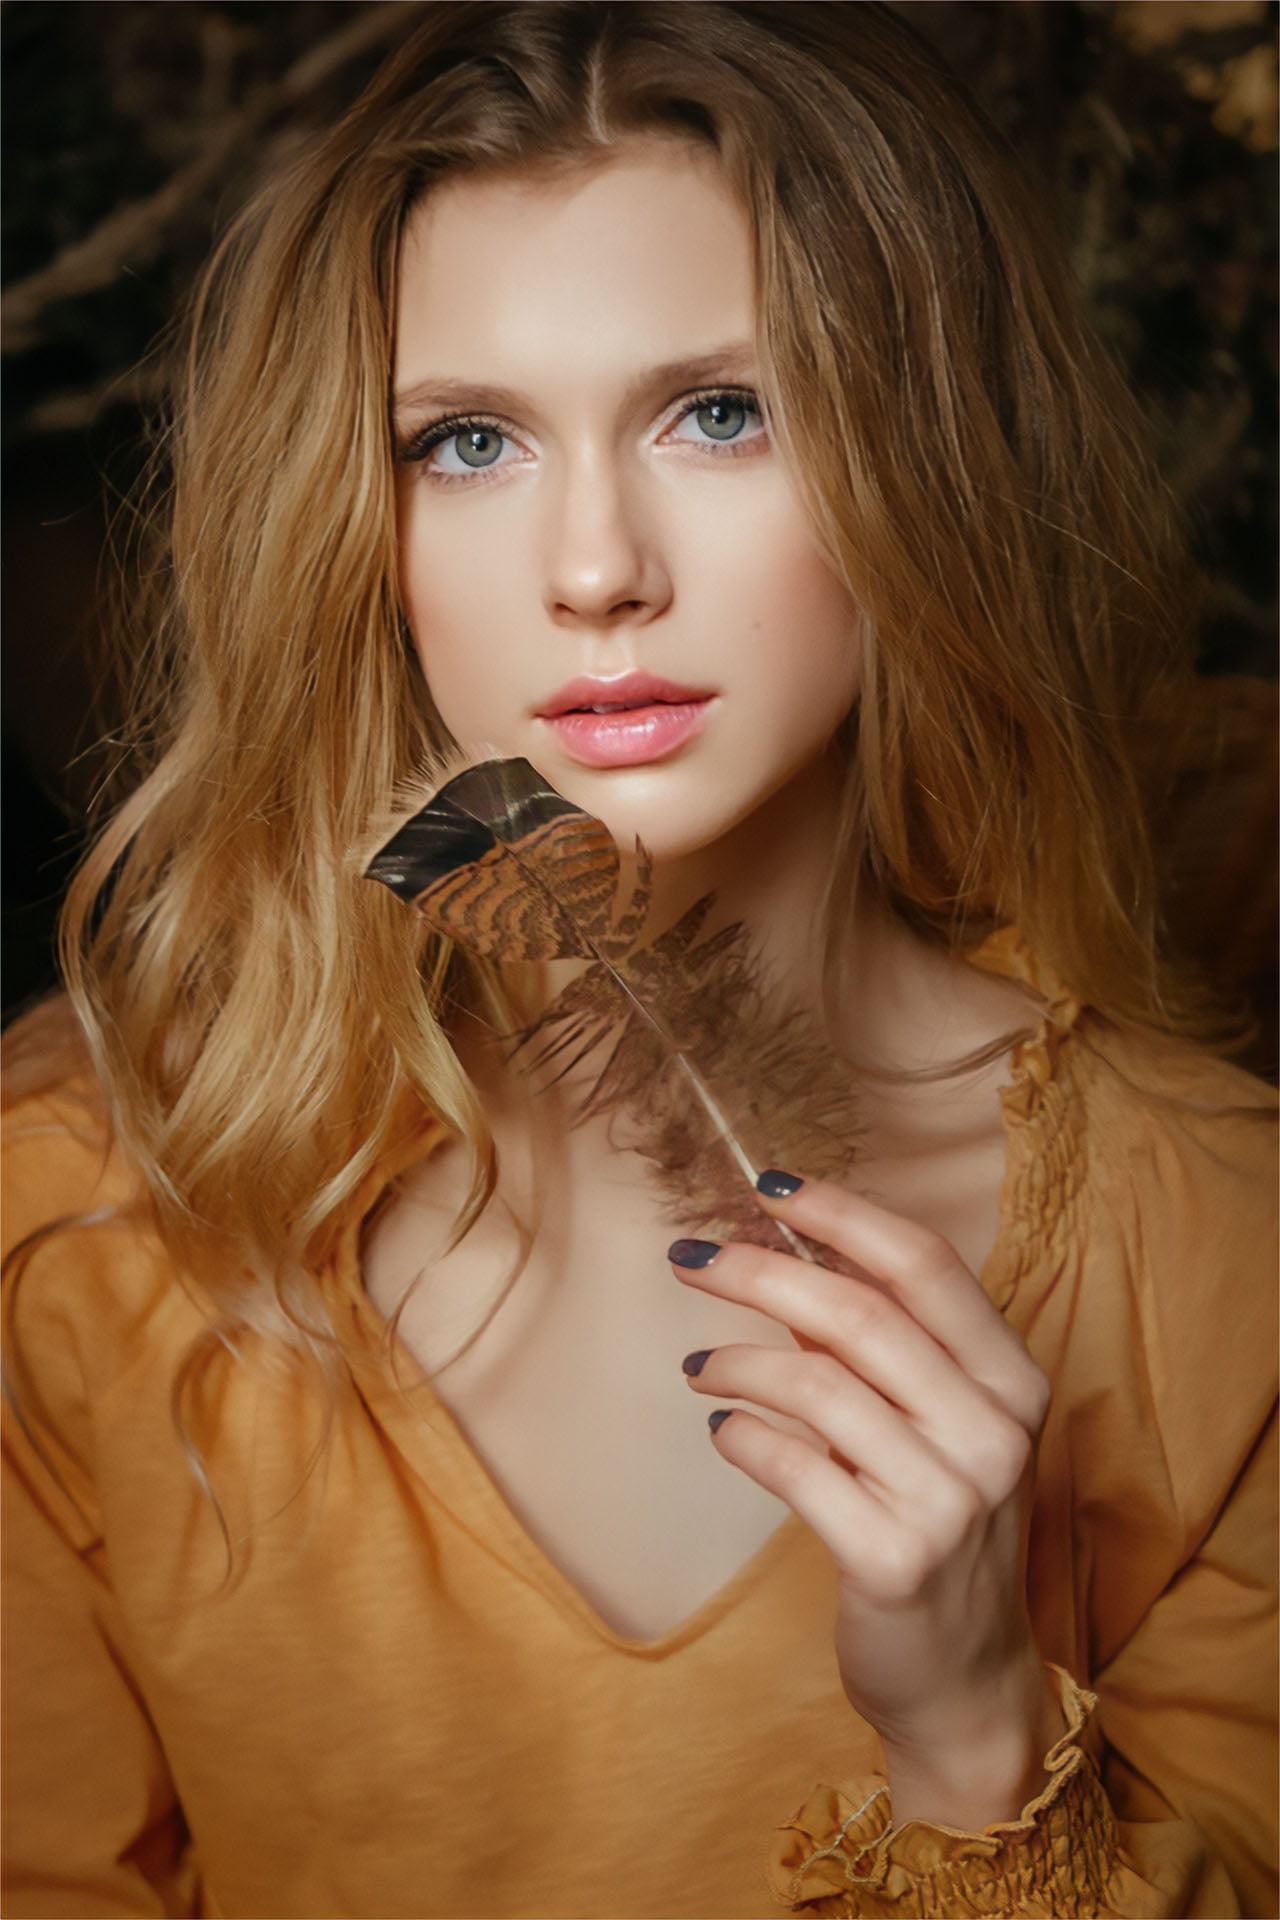 Elizaveta Podosetnikova, model, Russian, blonde, face